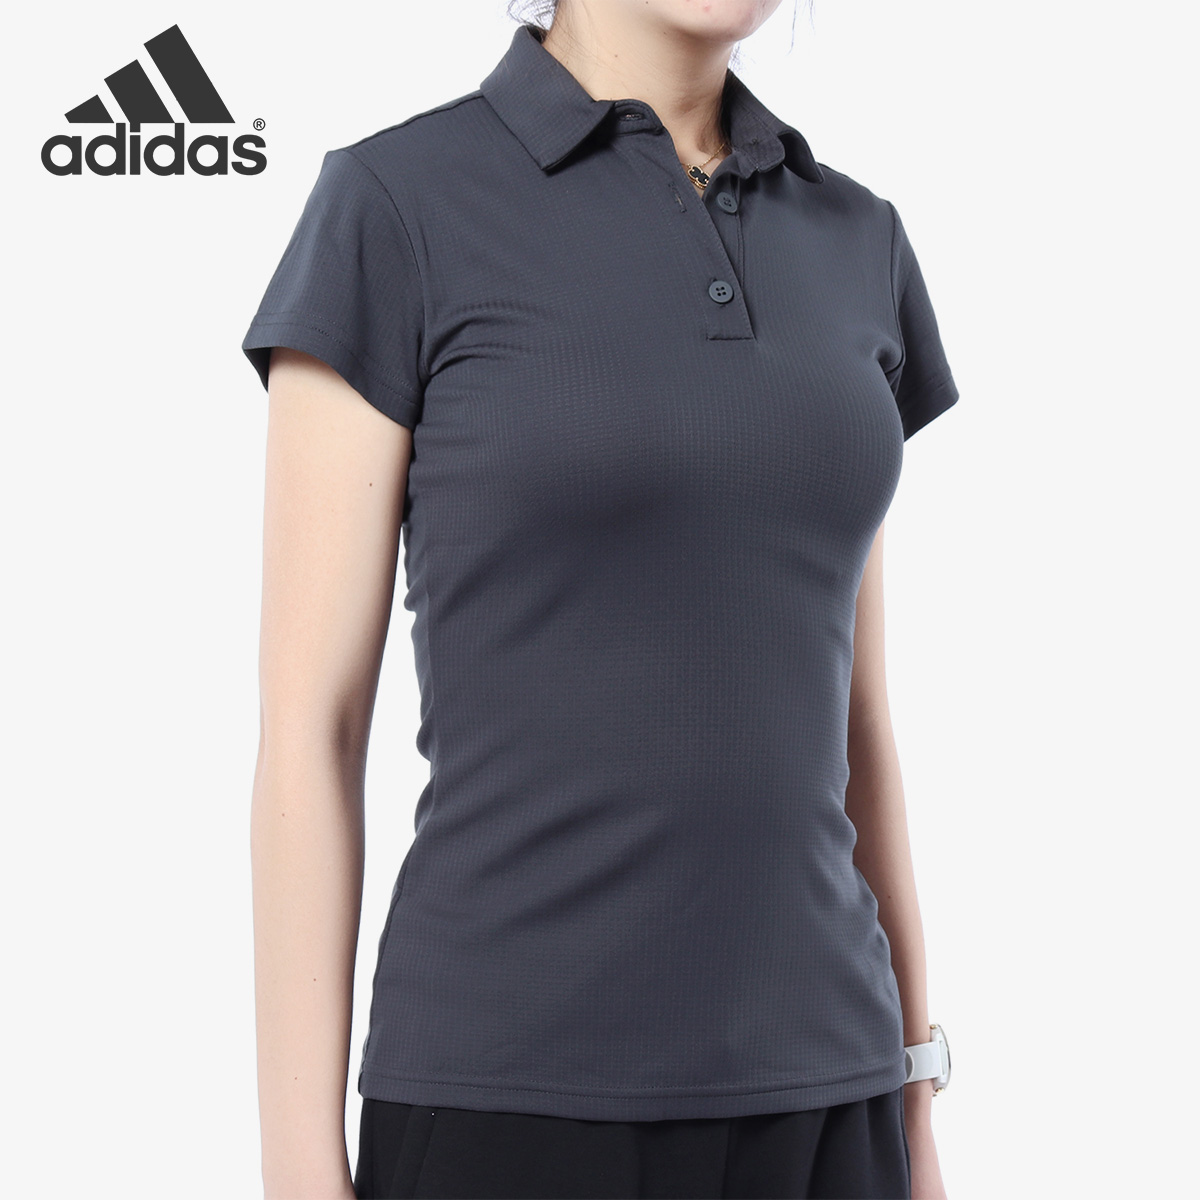 Adidas/Adidas Genuine 2019 New Women's Golf Tennis polo shirt Shirt CE1462